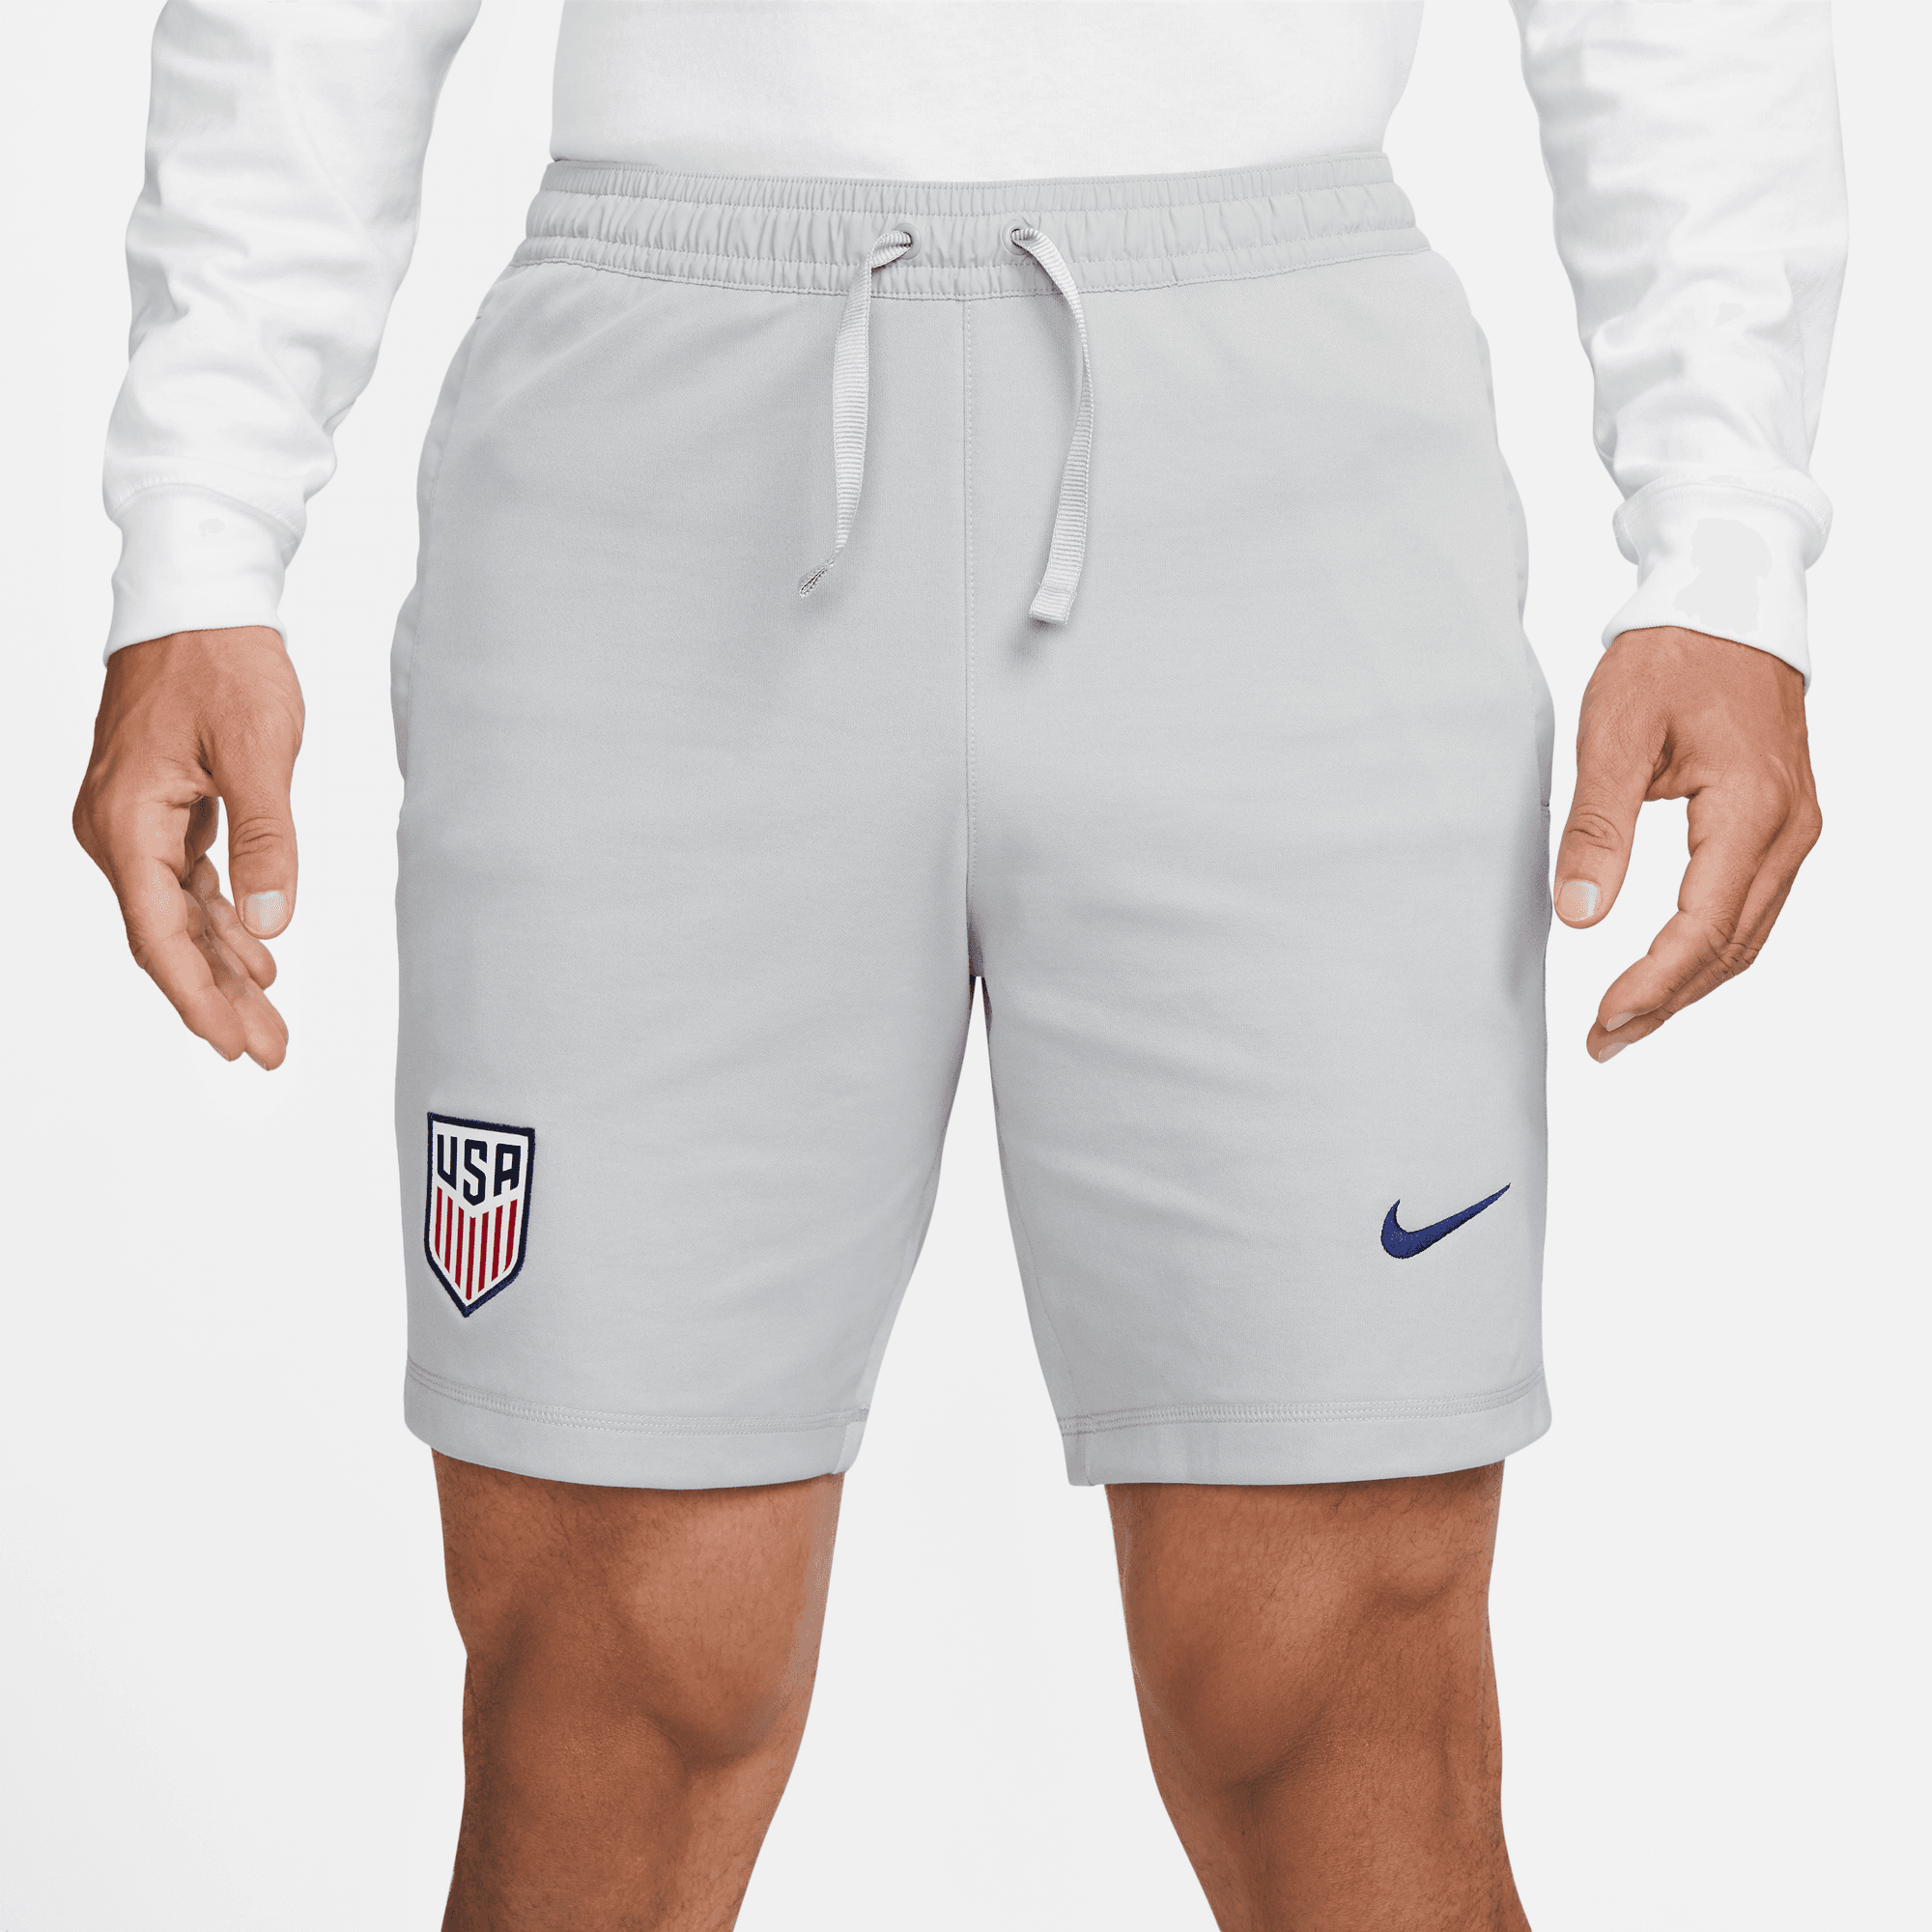 What Should I Wear Under Soccer Shorts?